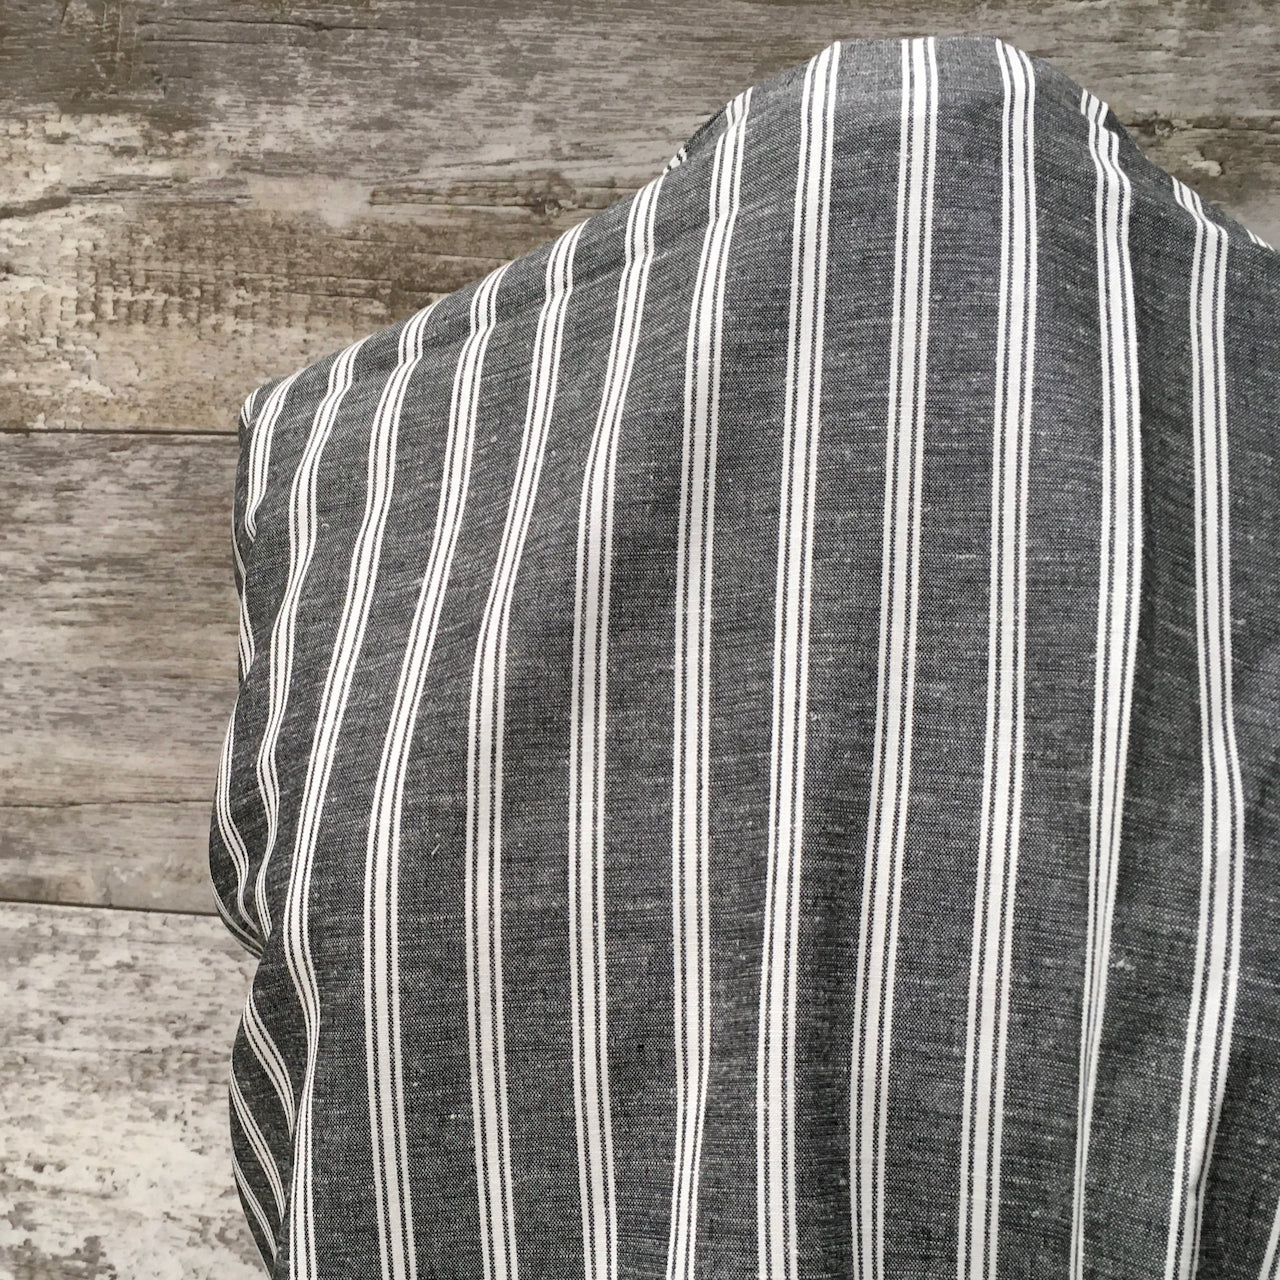 Boho Linen Stripe - Sold by the half yard